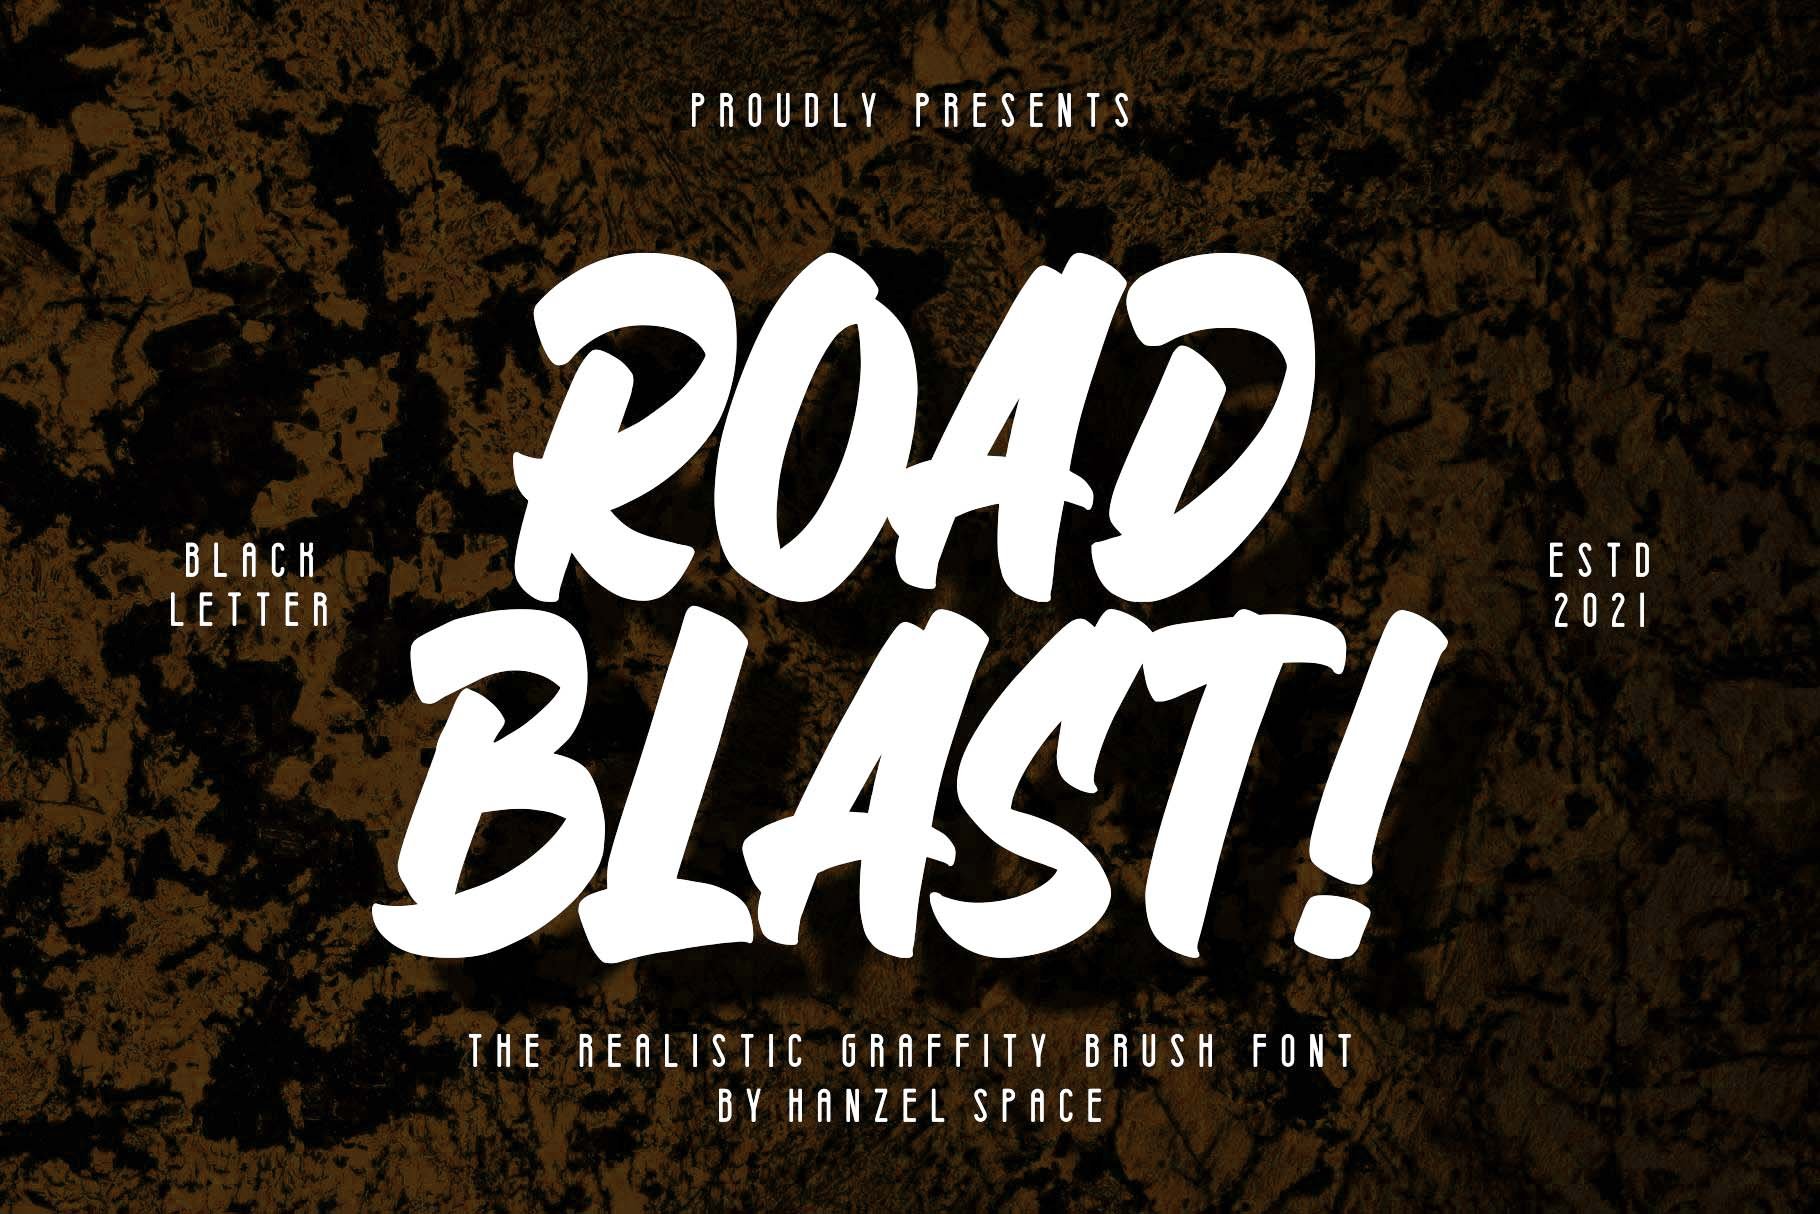 Road Blast! cover image.